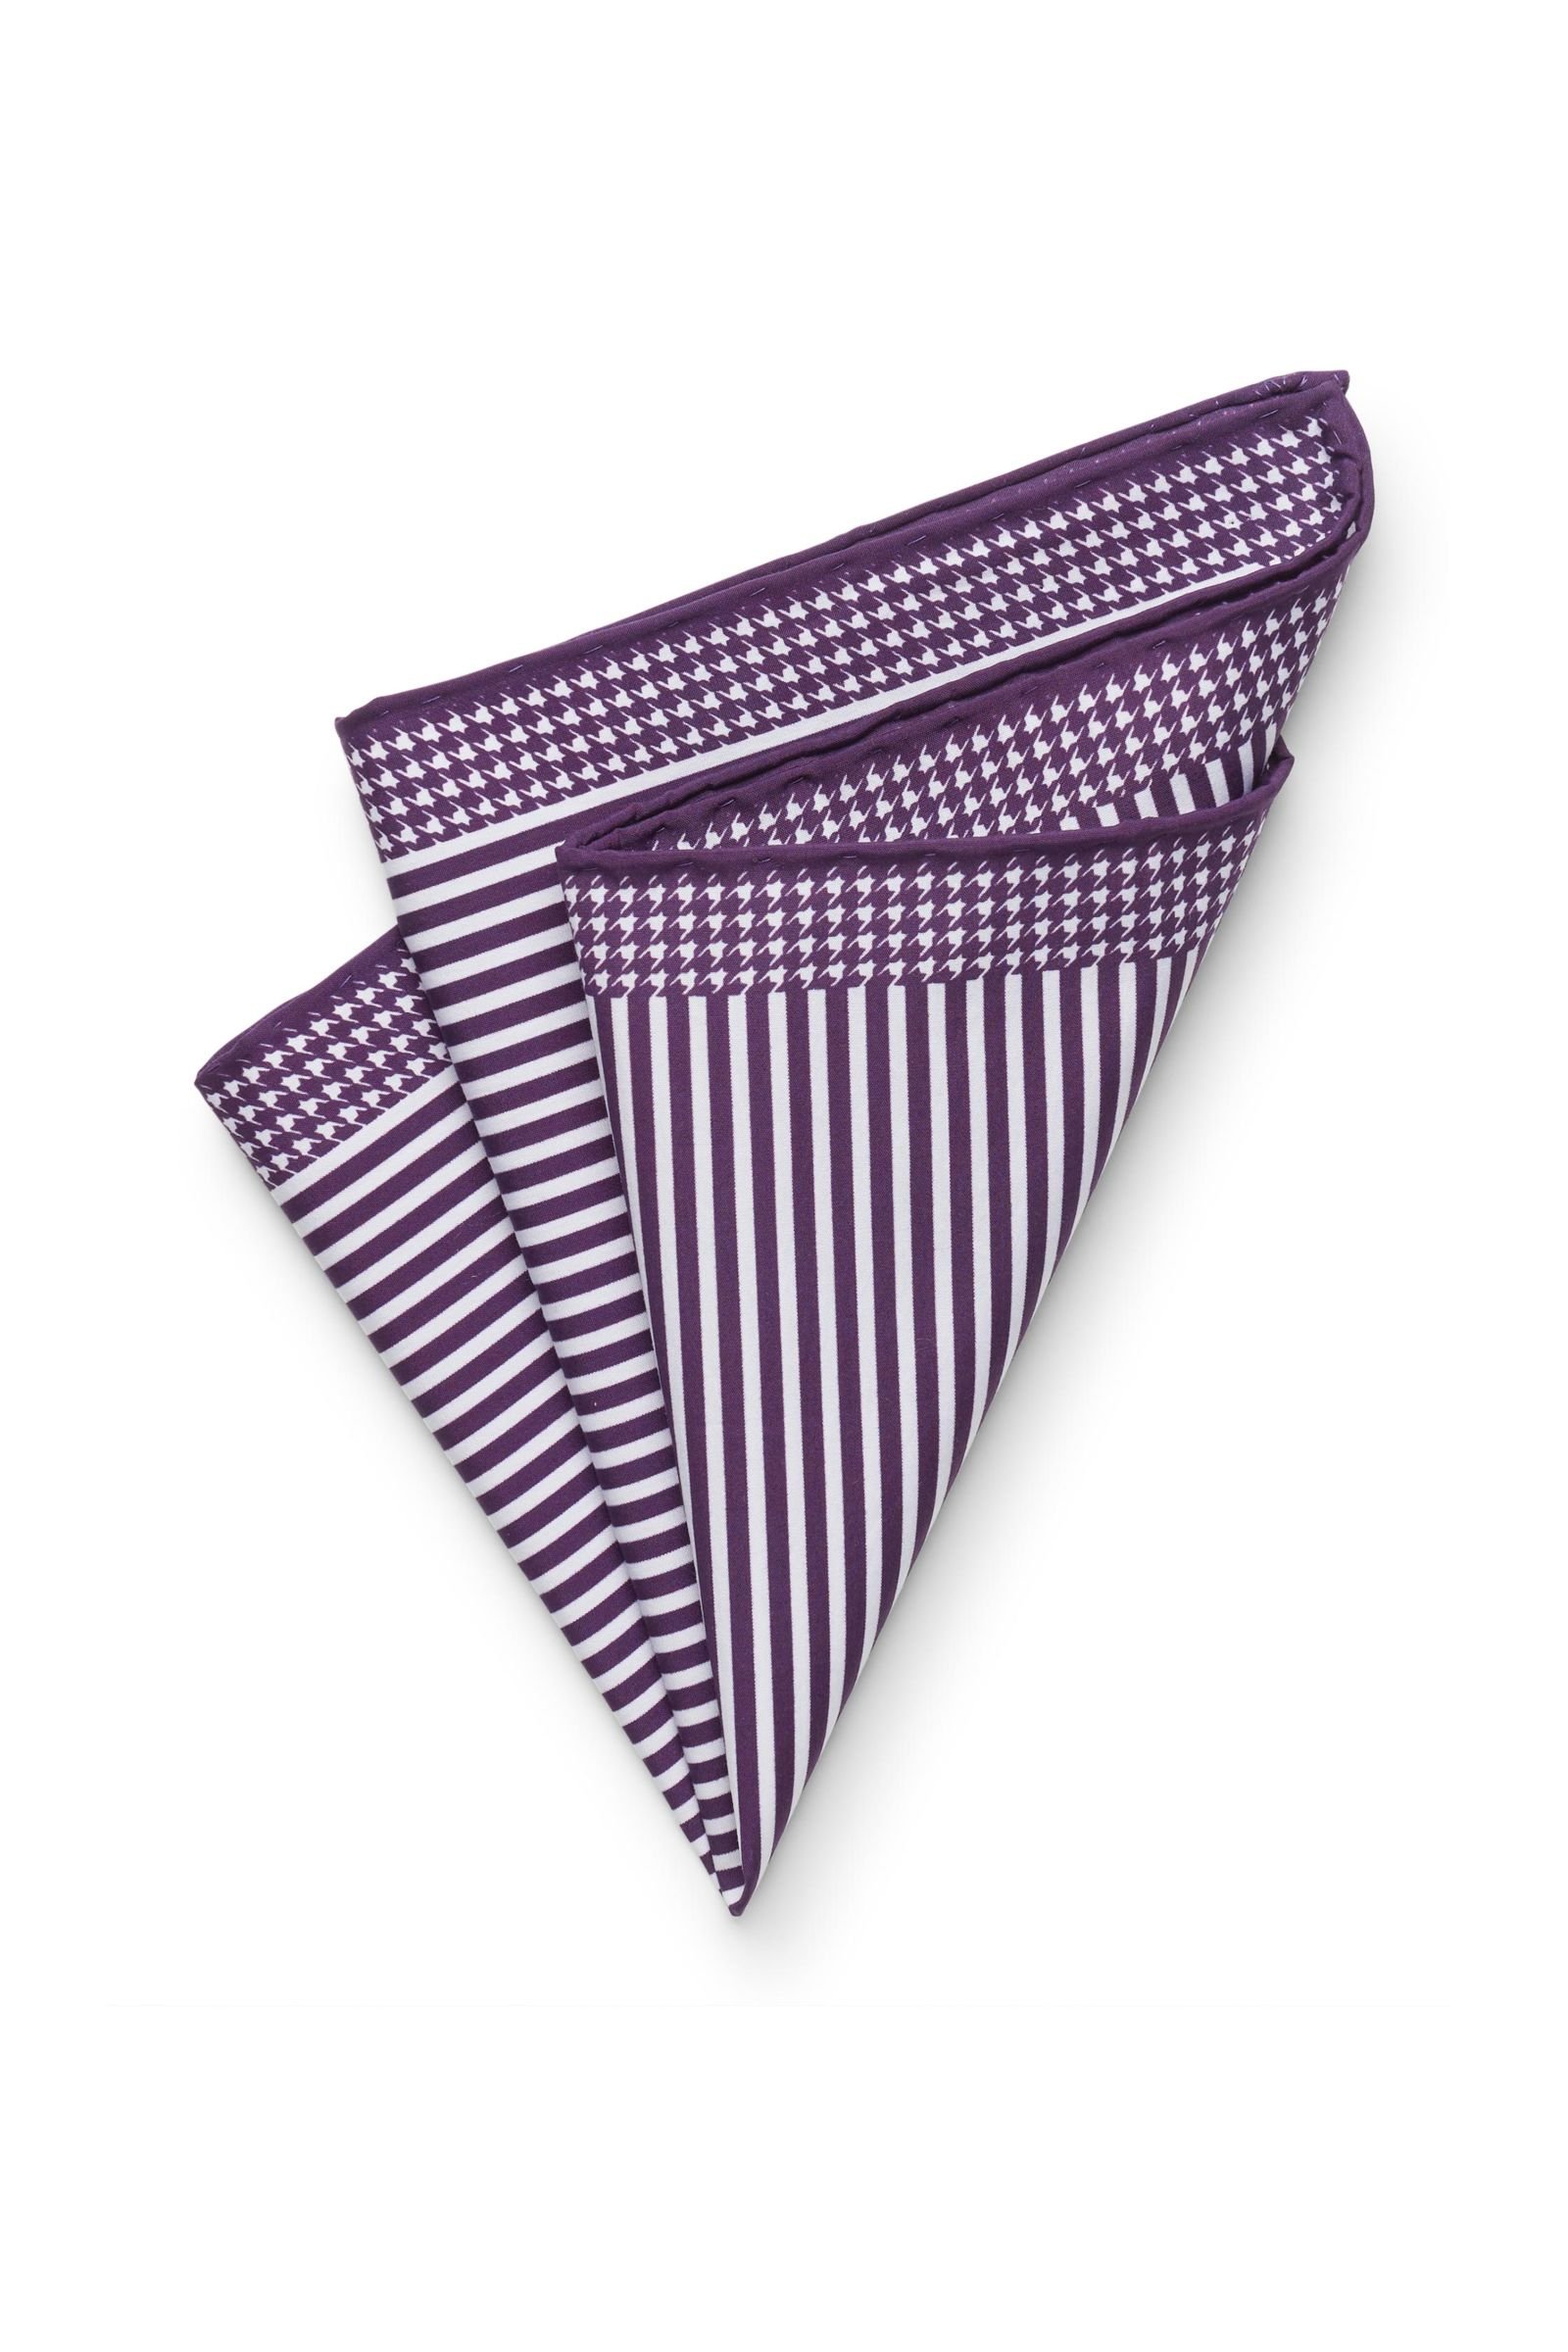 Pocket square purple/white striped